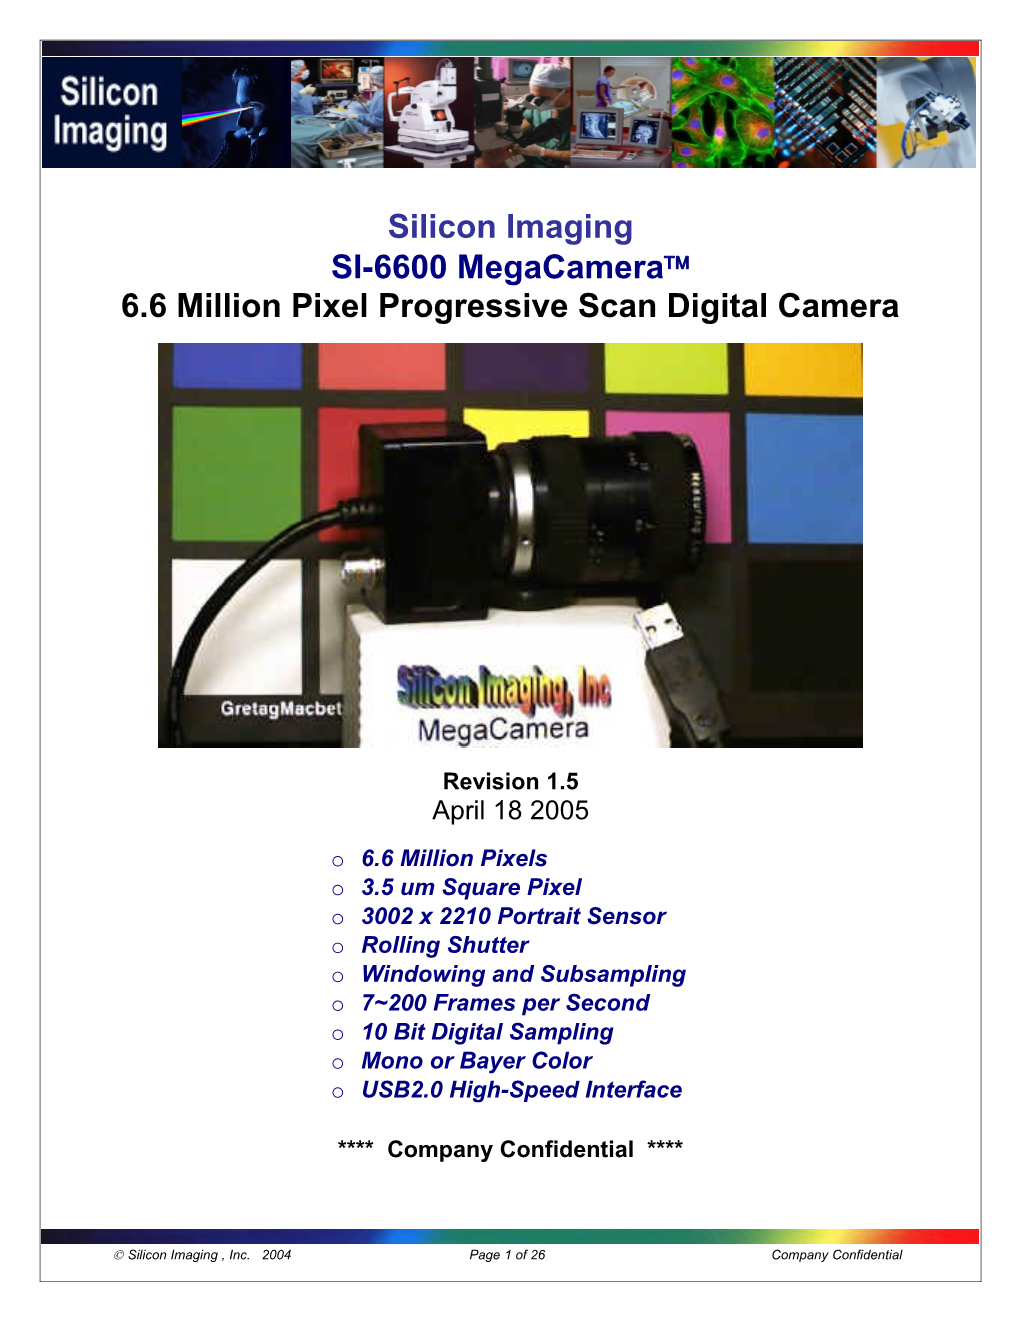 6.6 Million Pixel Progressive Scan Digital Camera